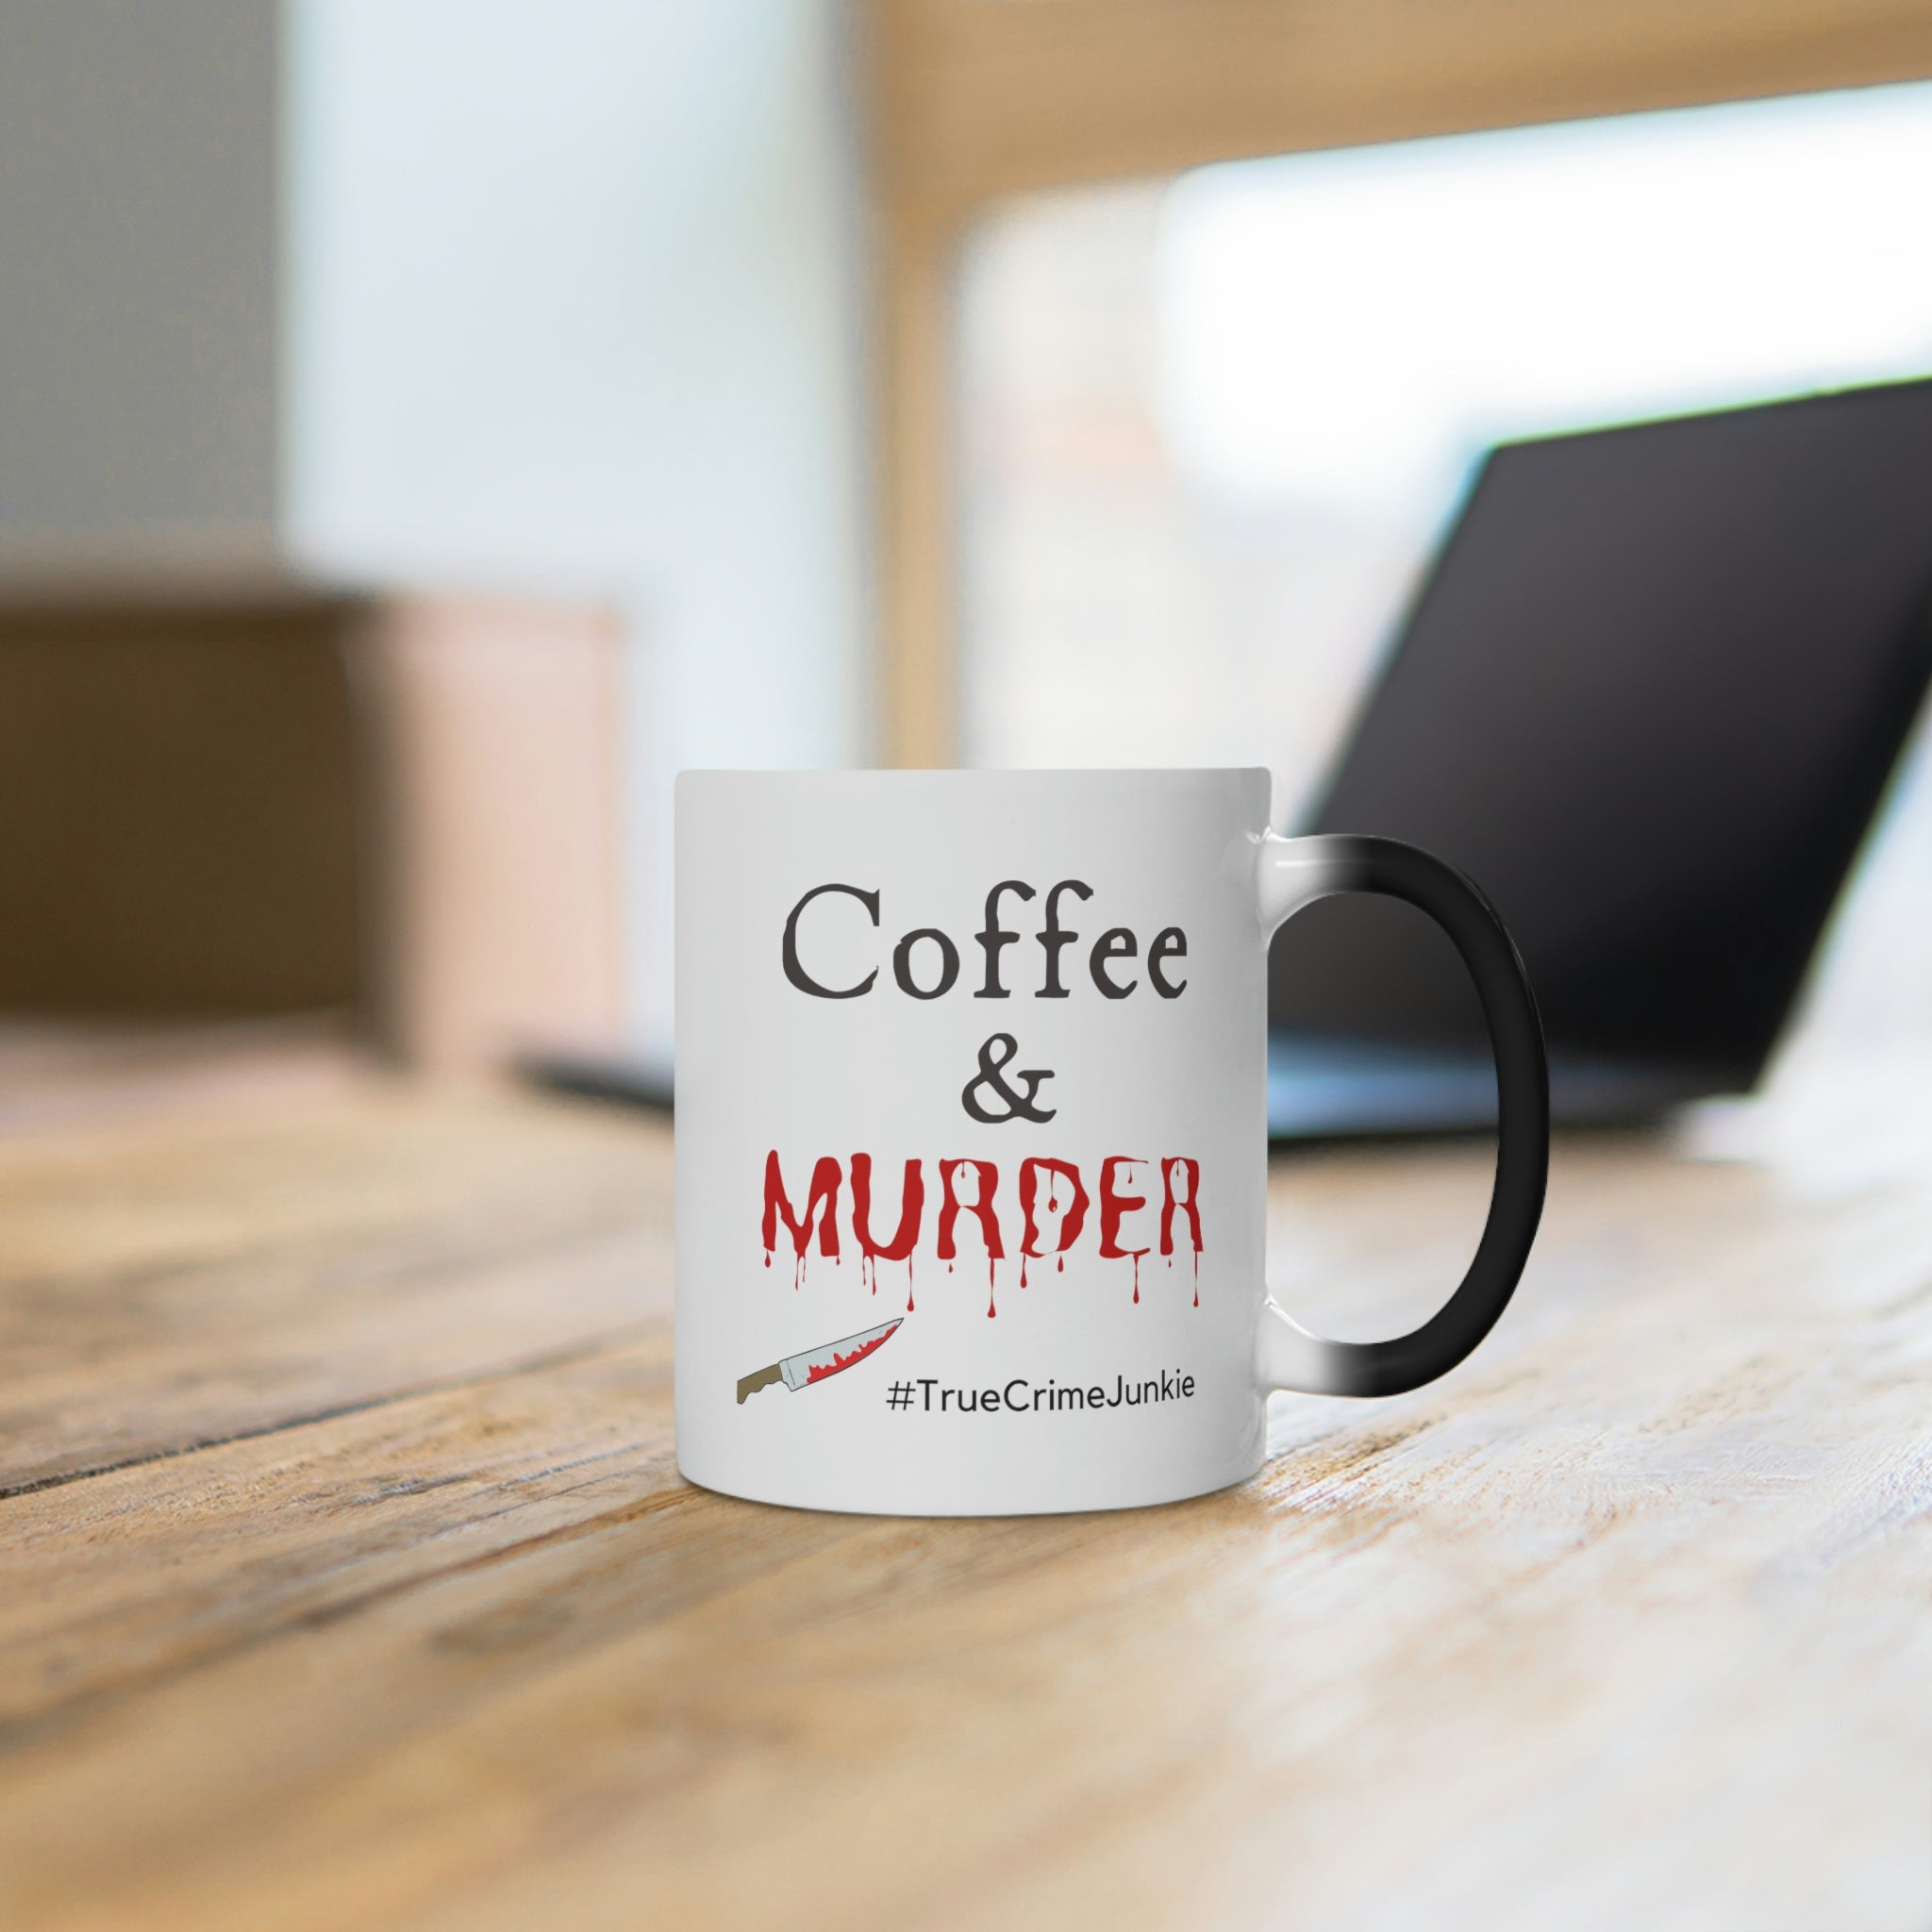 True Crime Coffee Magic Mug, Color Changing 12 oz or 15 oz - Durazza